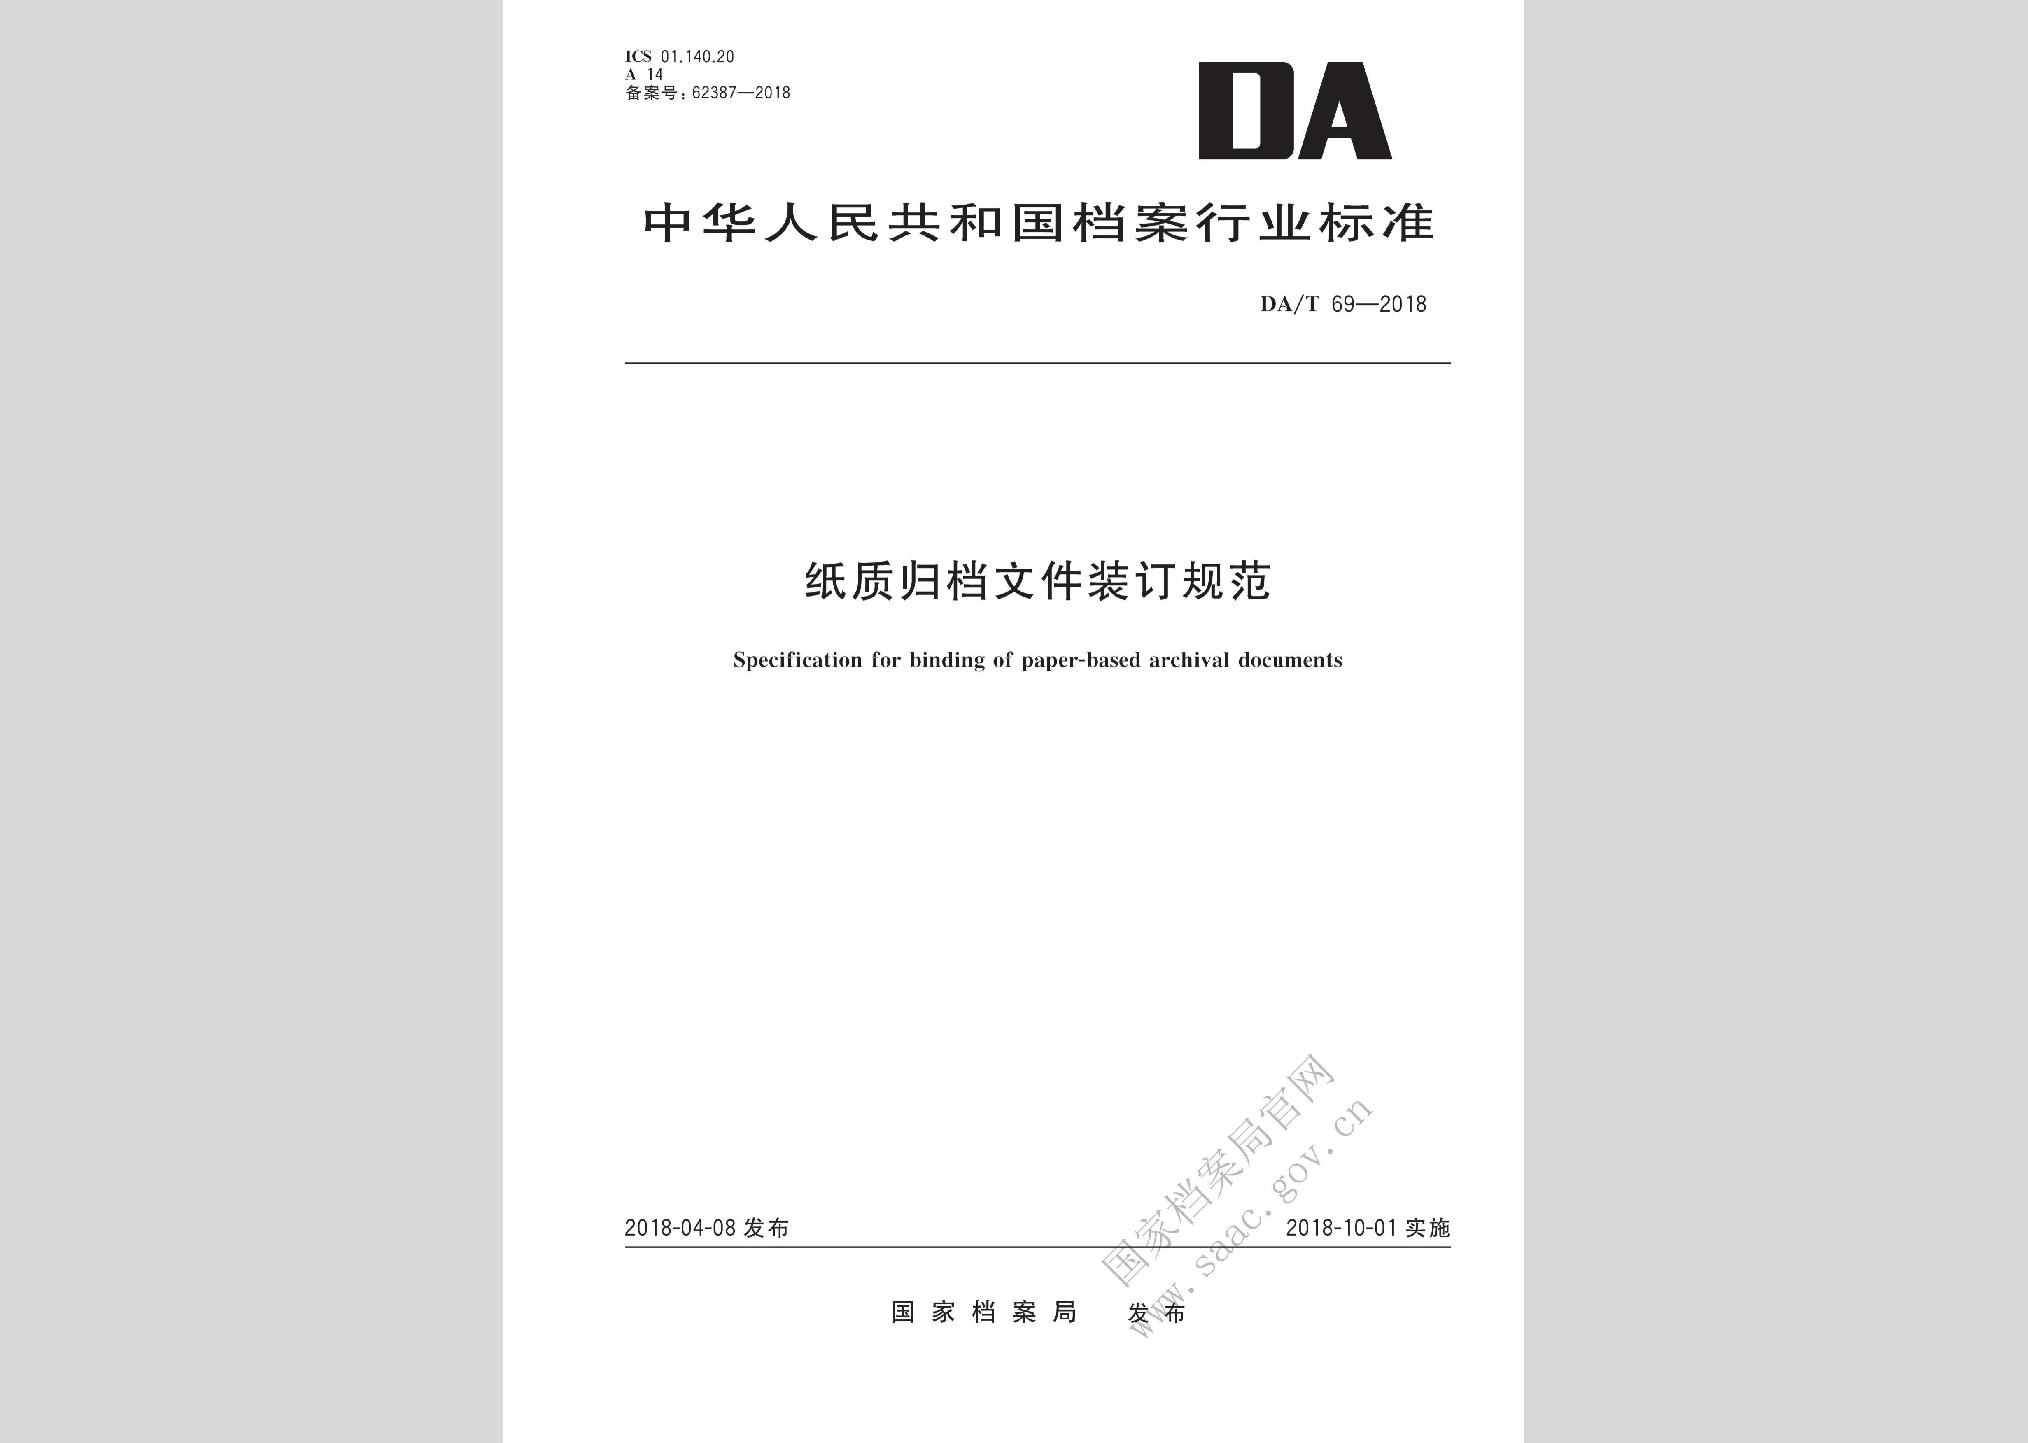 DA/T69-2018：纸质归档文件装订规范